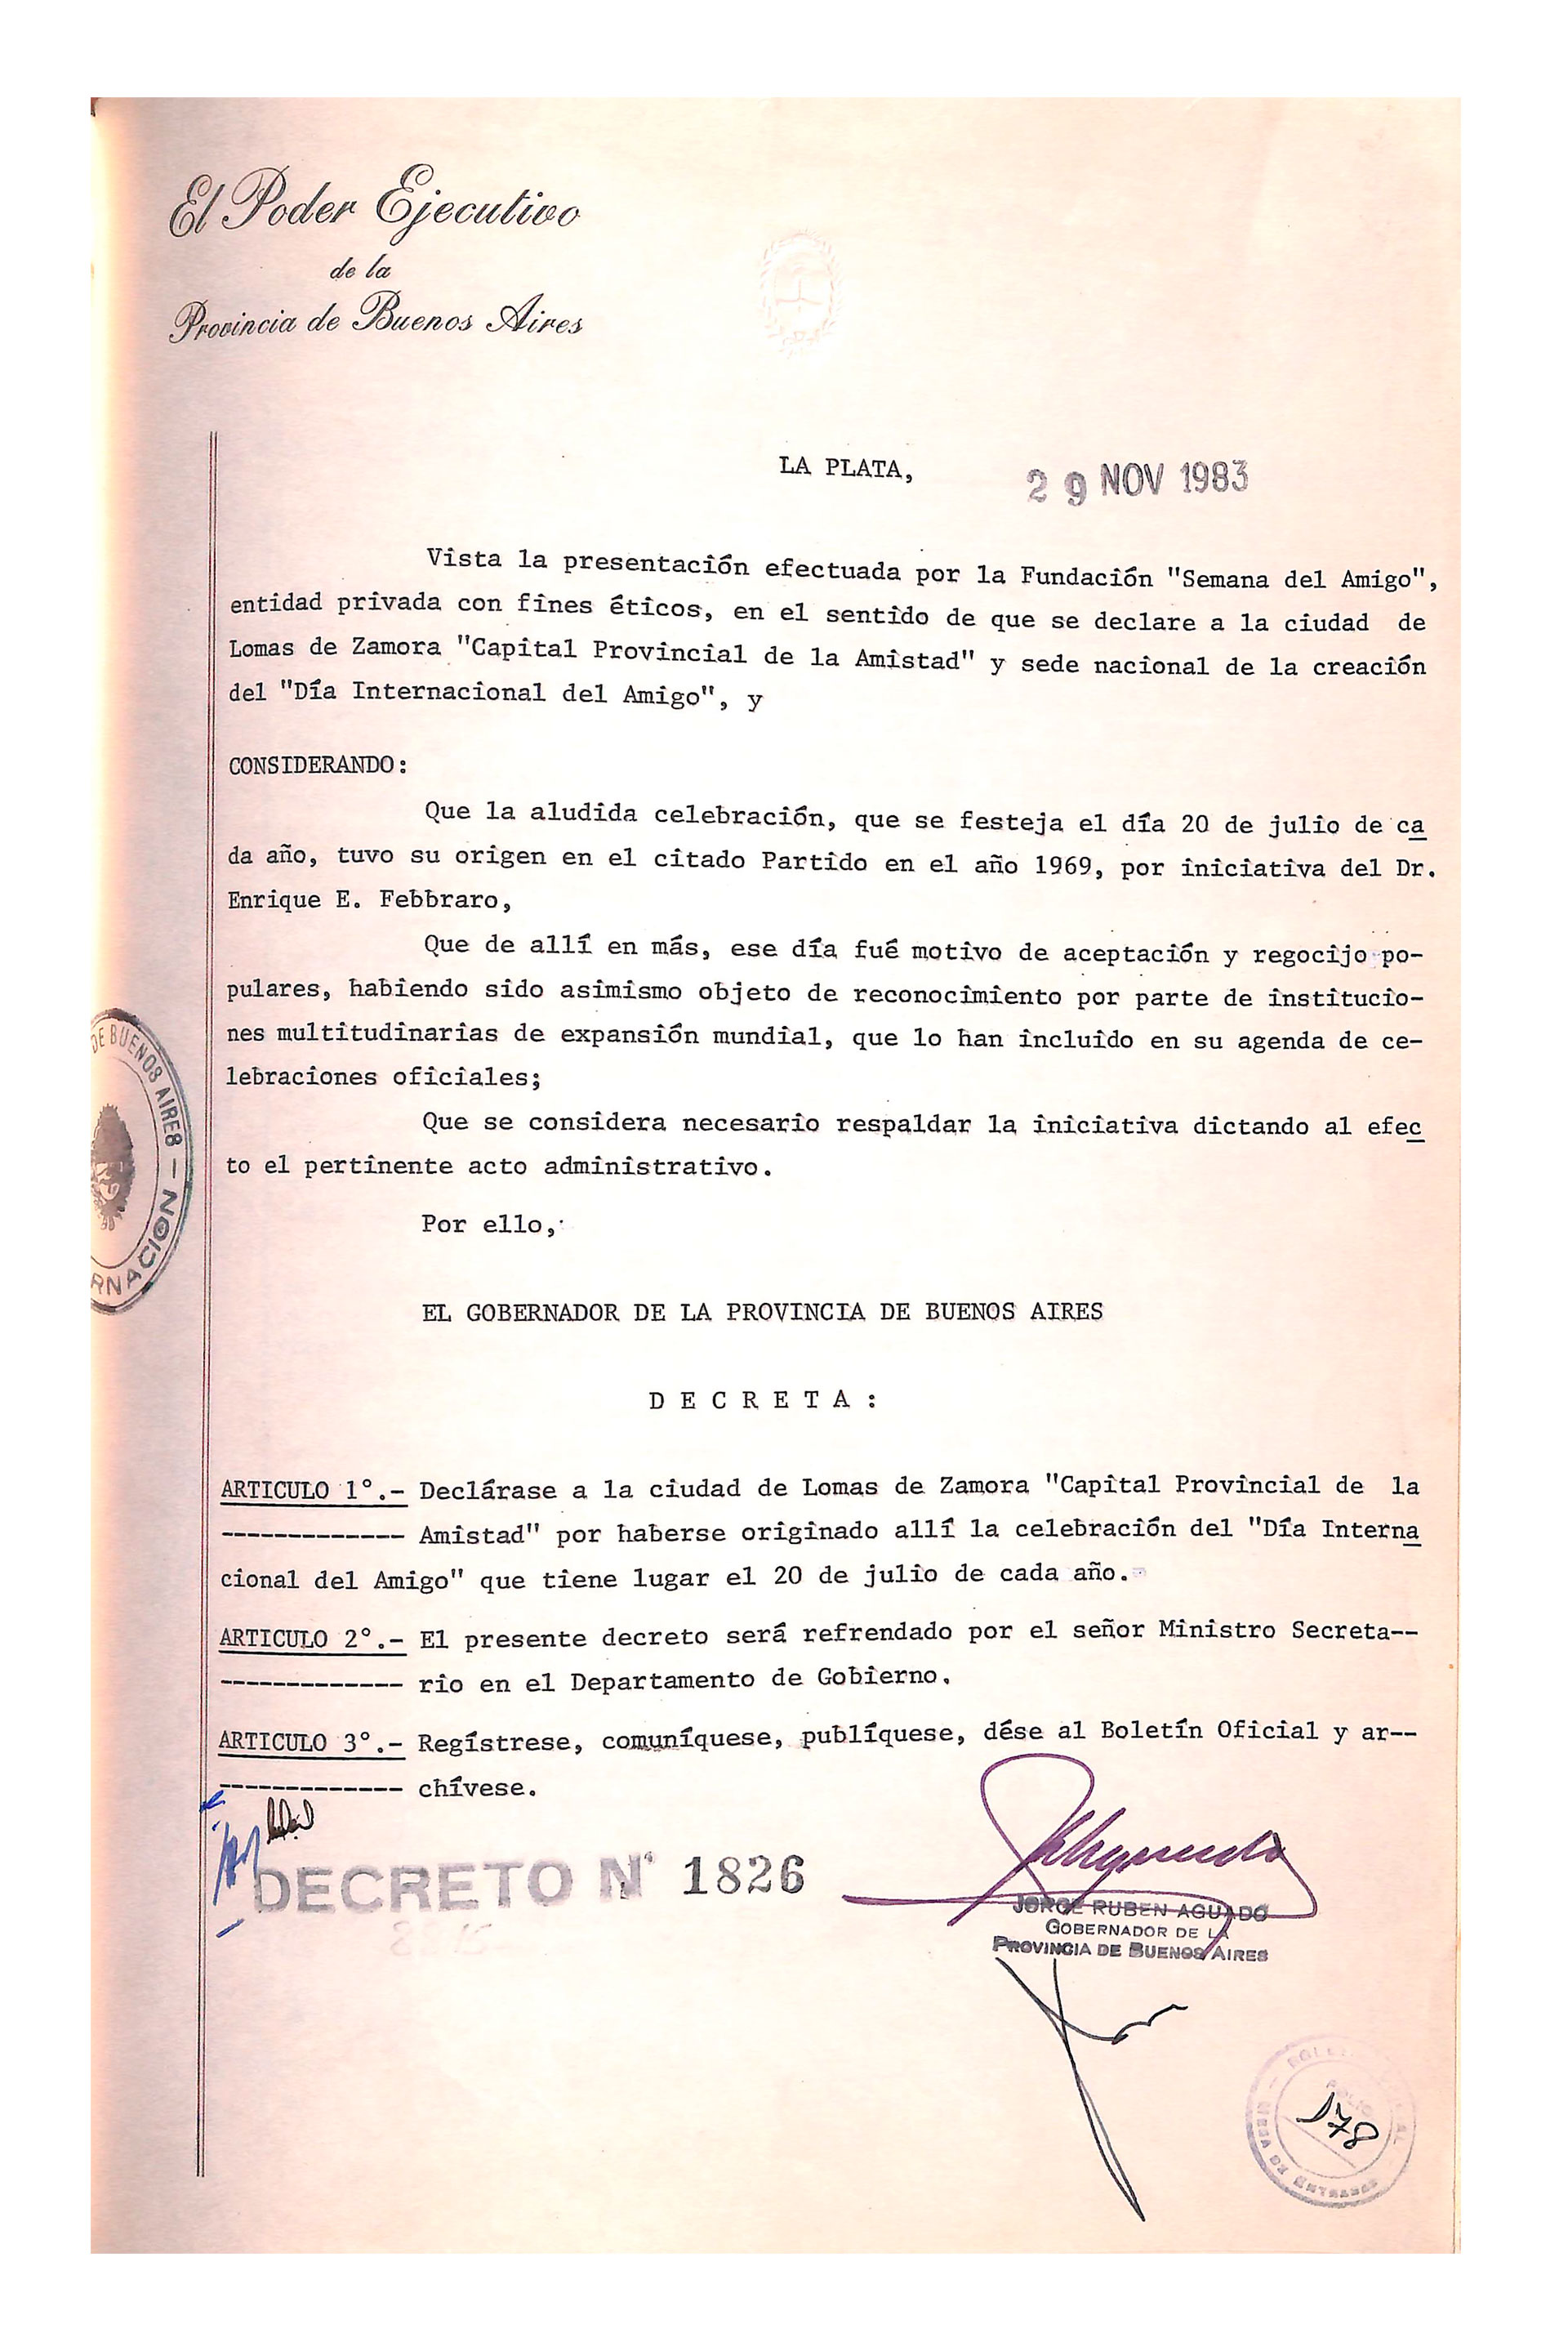 El decreto de la provincia de Buenos Aires que estableció en 1983 que "la capital provincial de la amistad" era Lomas de Zamora